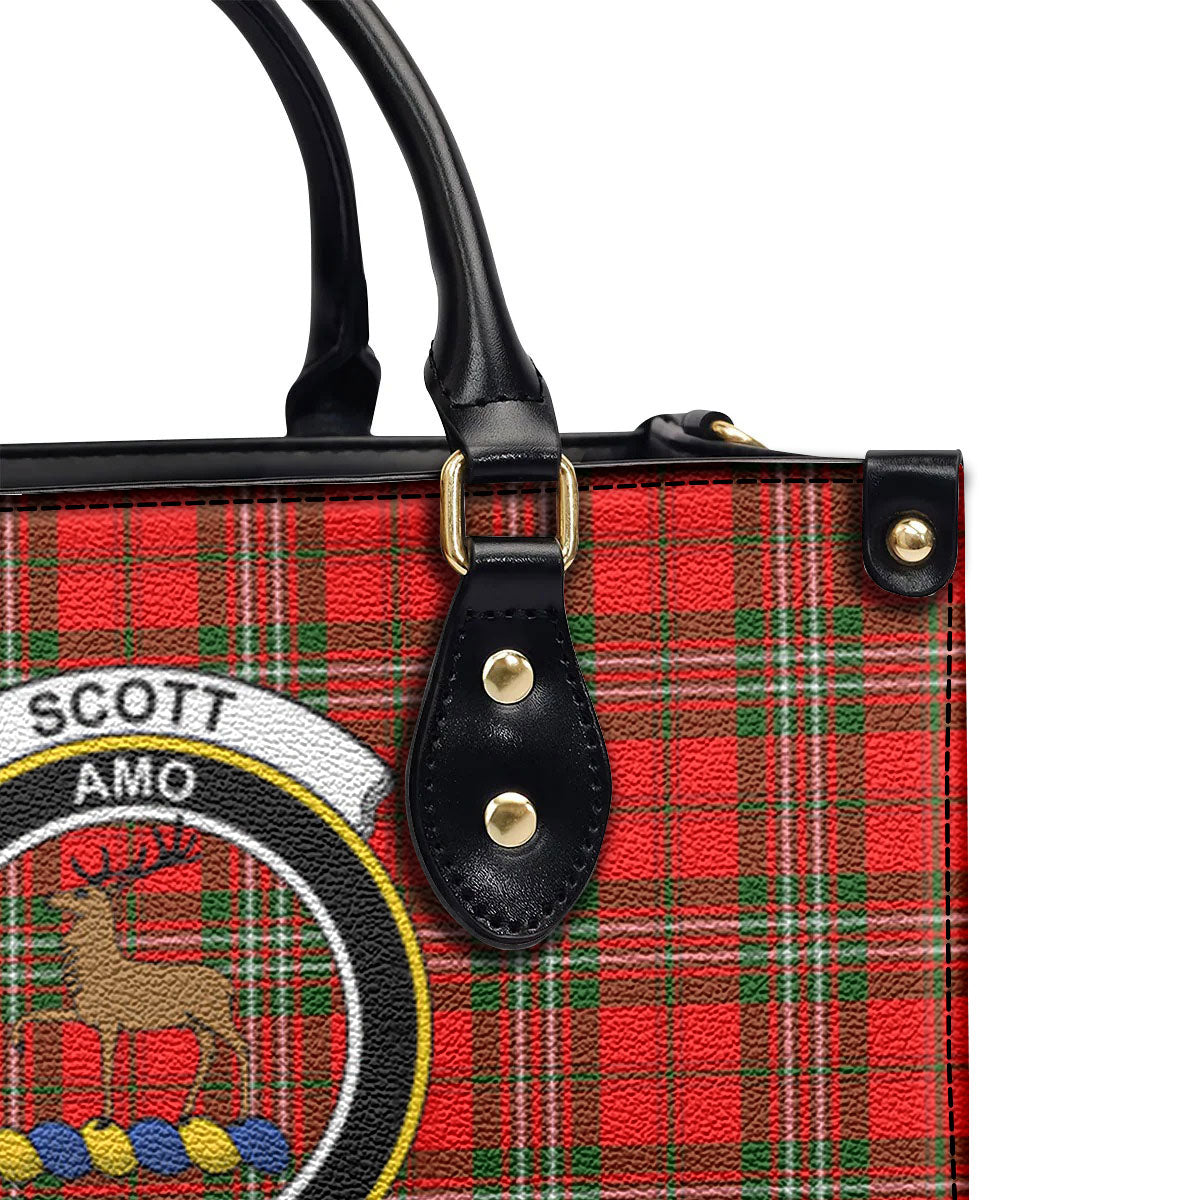 Scott Modern Tartan Crest Leather Handbag